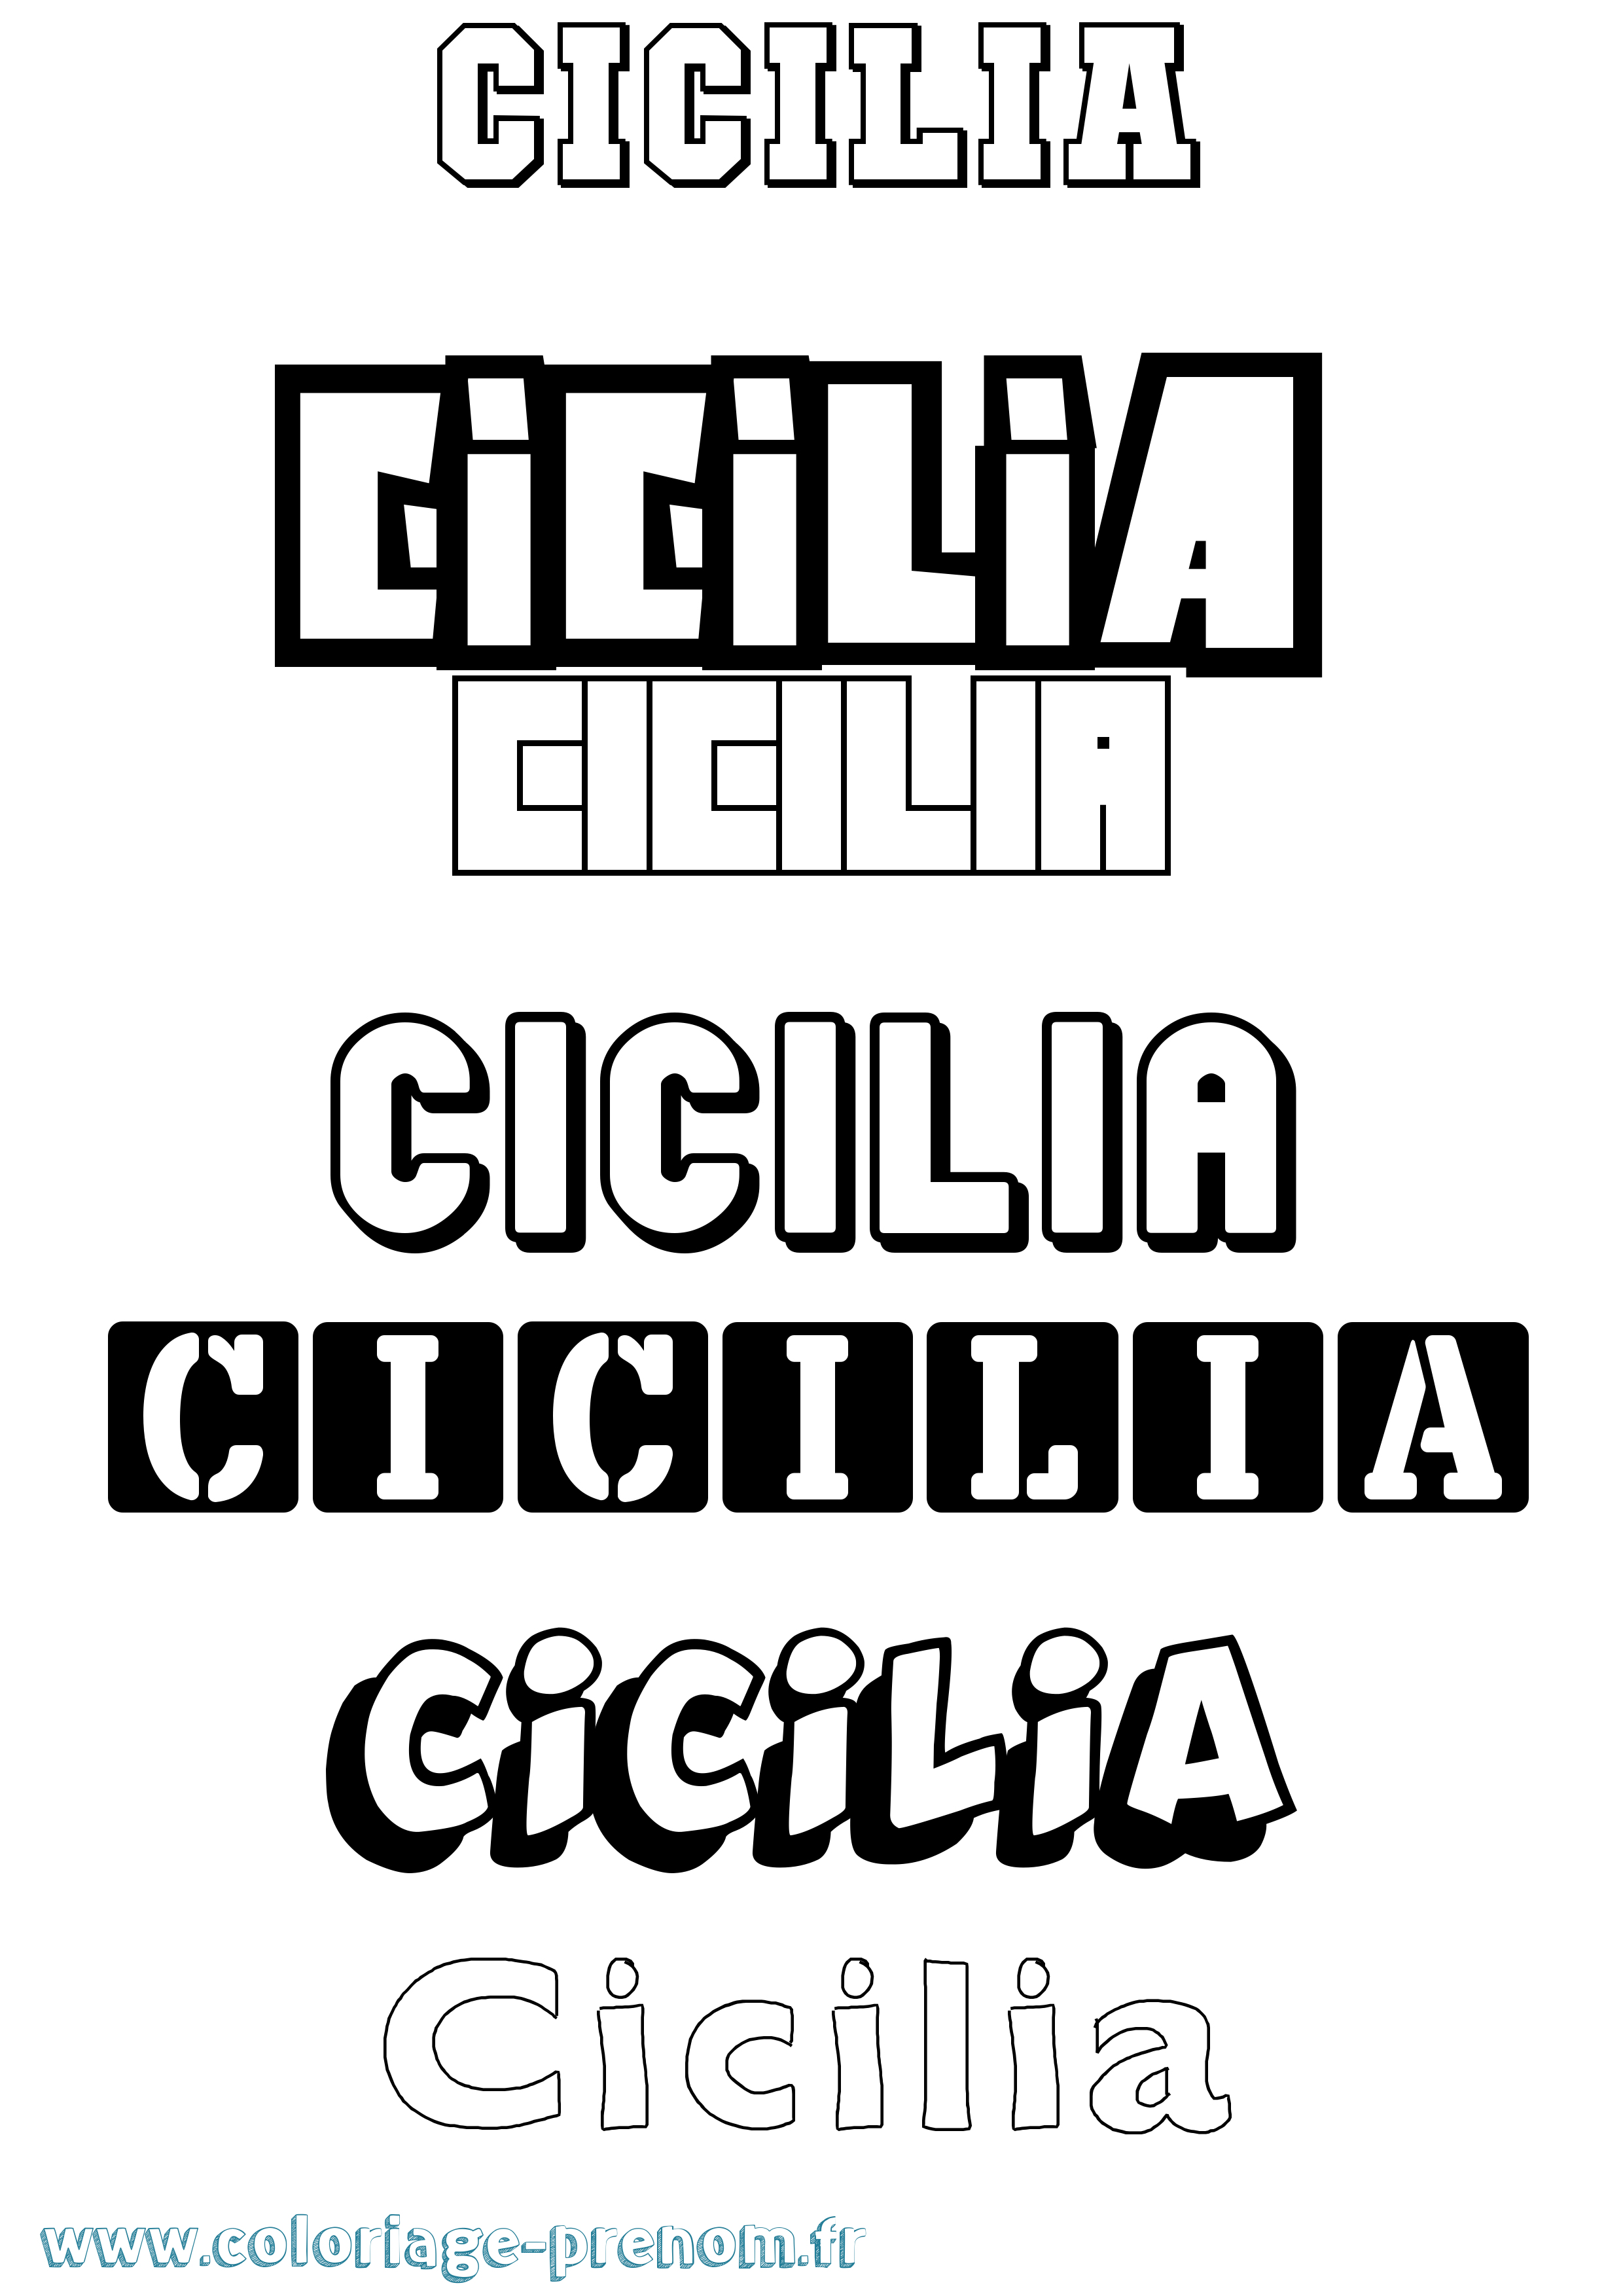 Coloriage prénom Cicilia Simple